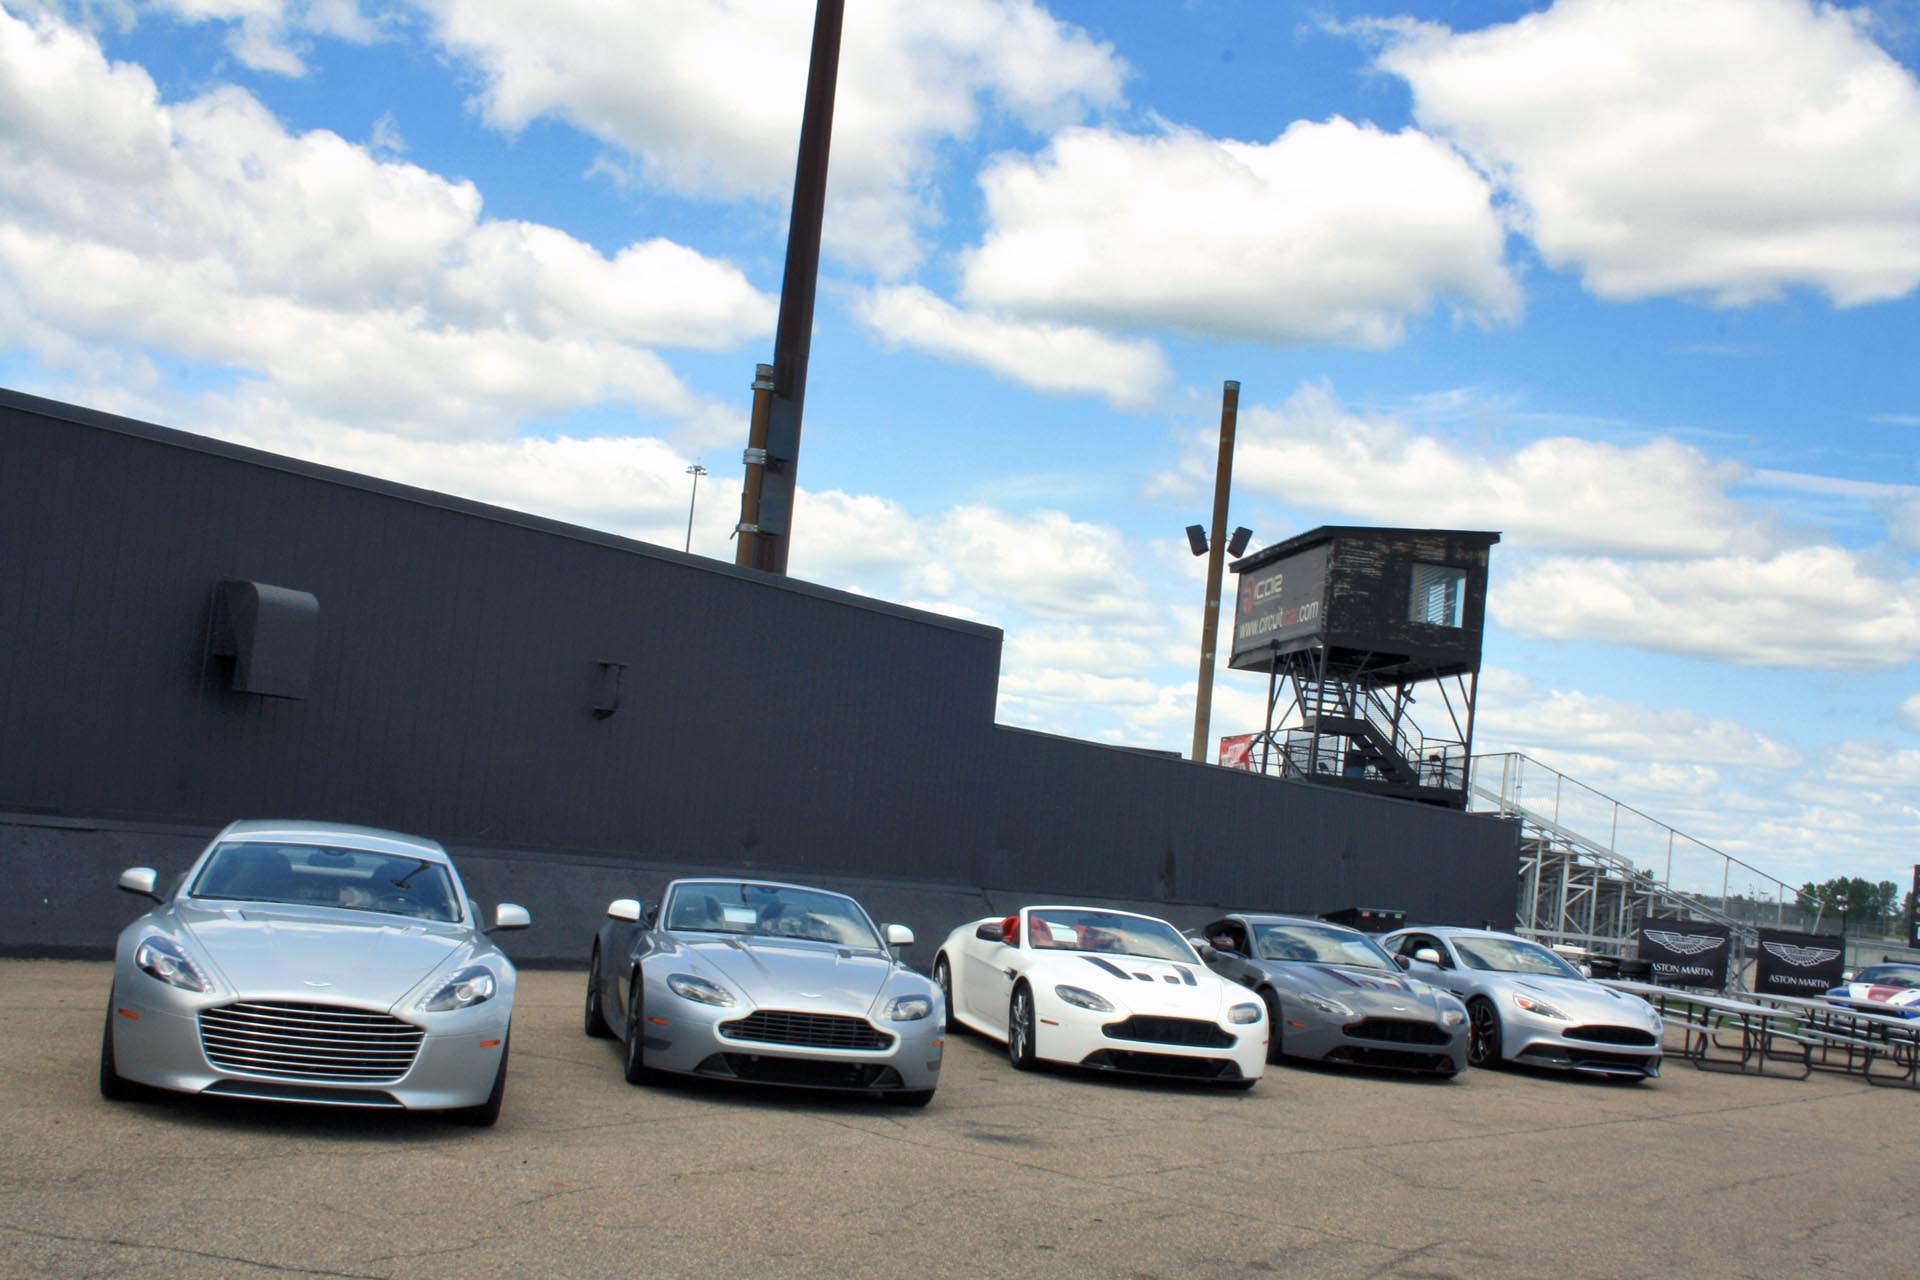 Left to right: Rapide S, Vantage GT Roadster, V12 Vantage S Roadster, V12 Vantage S, Vanquish